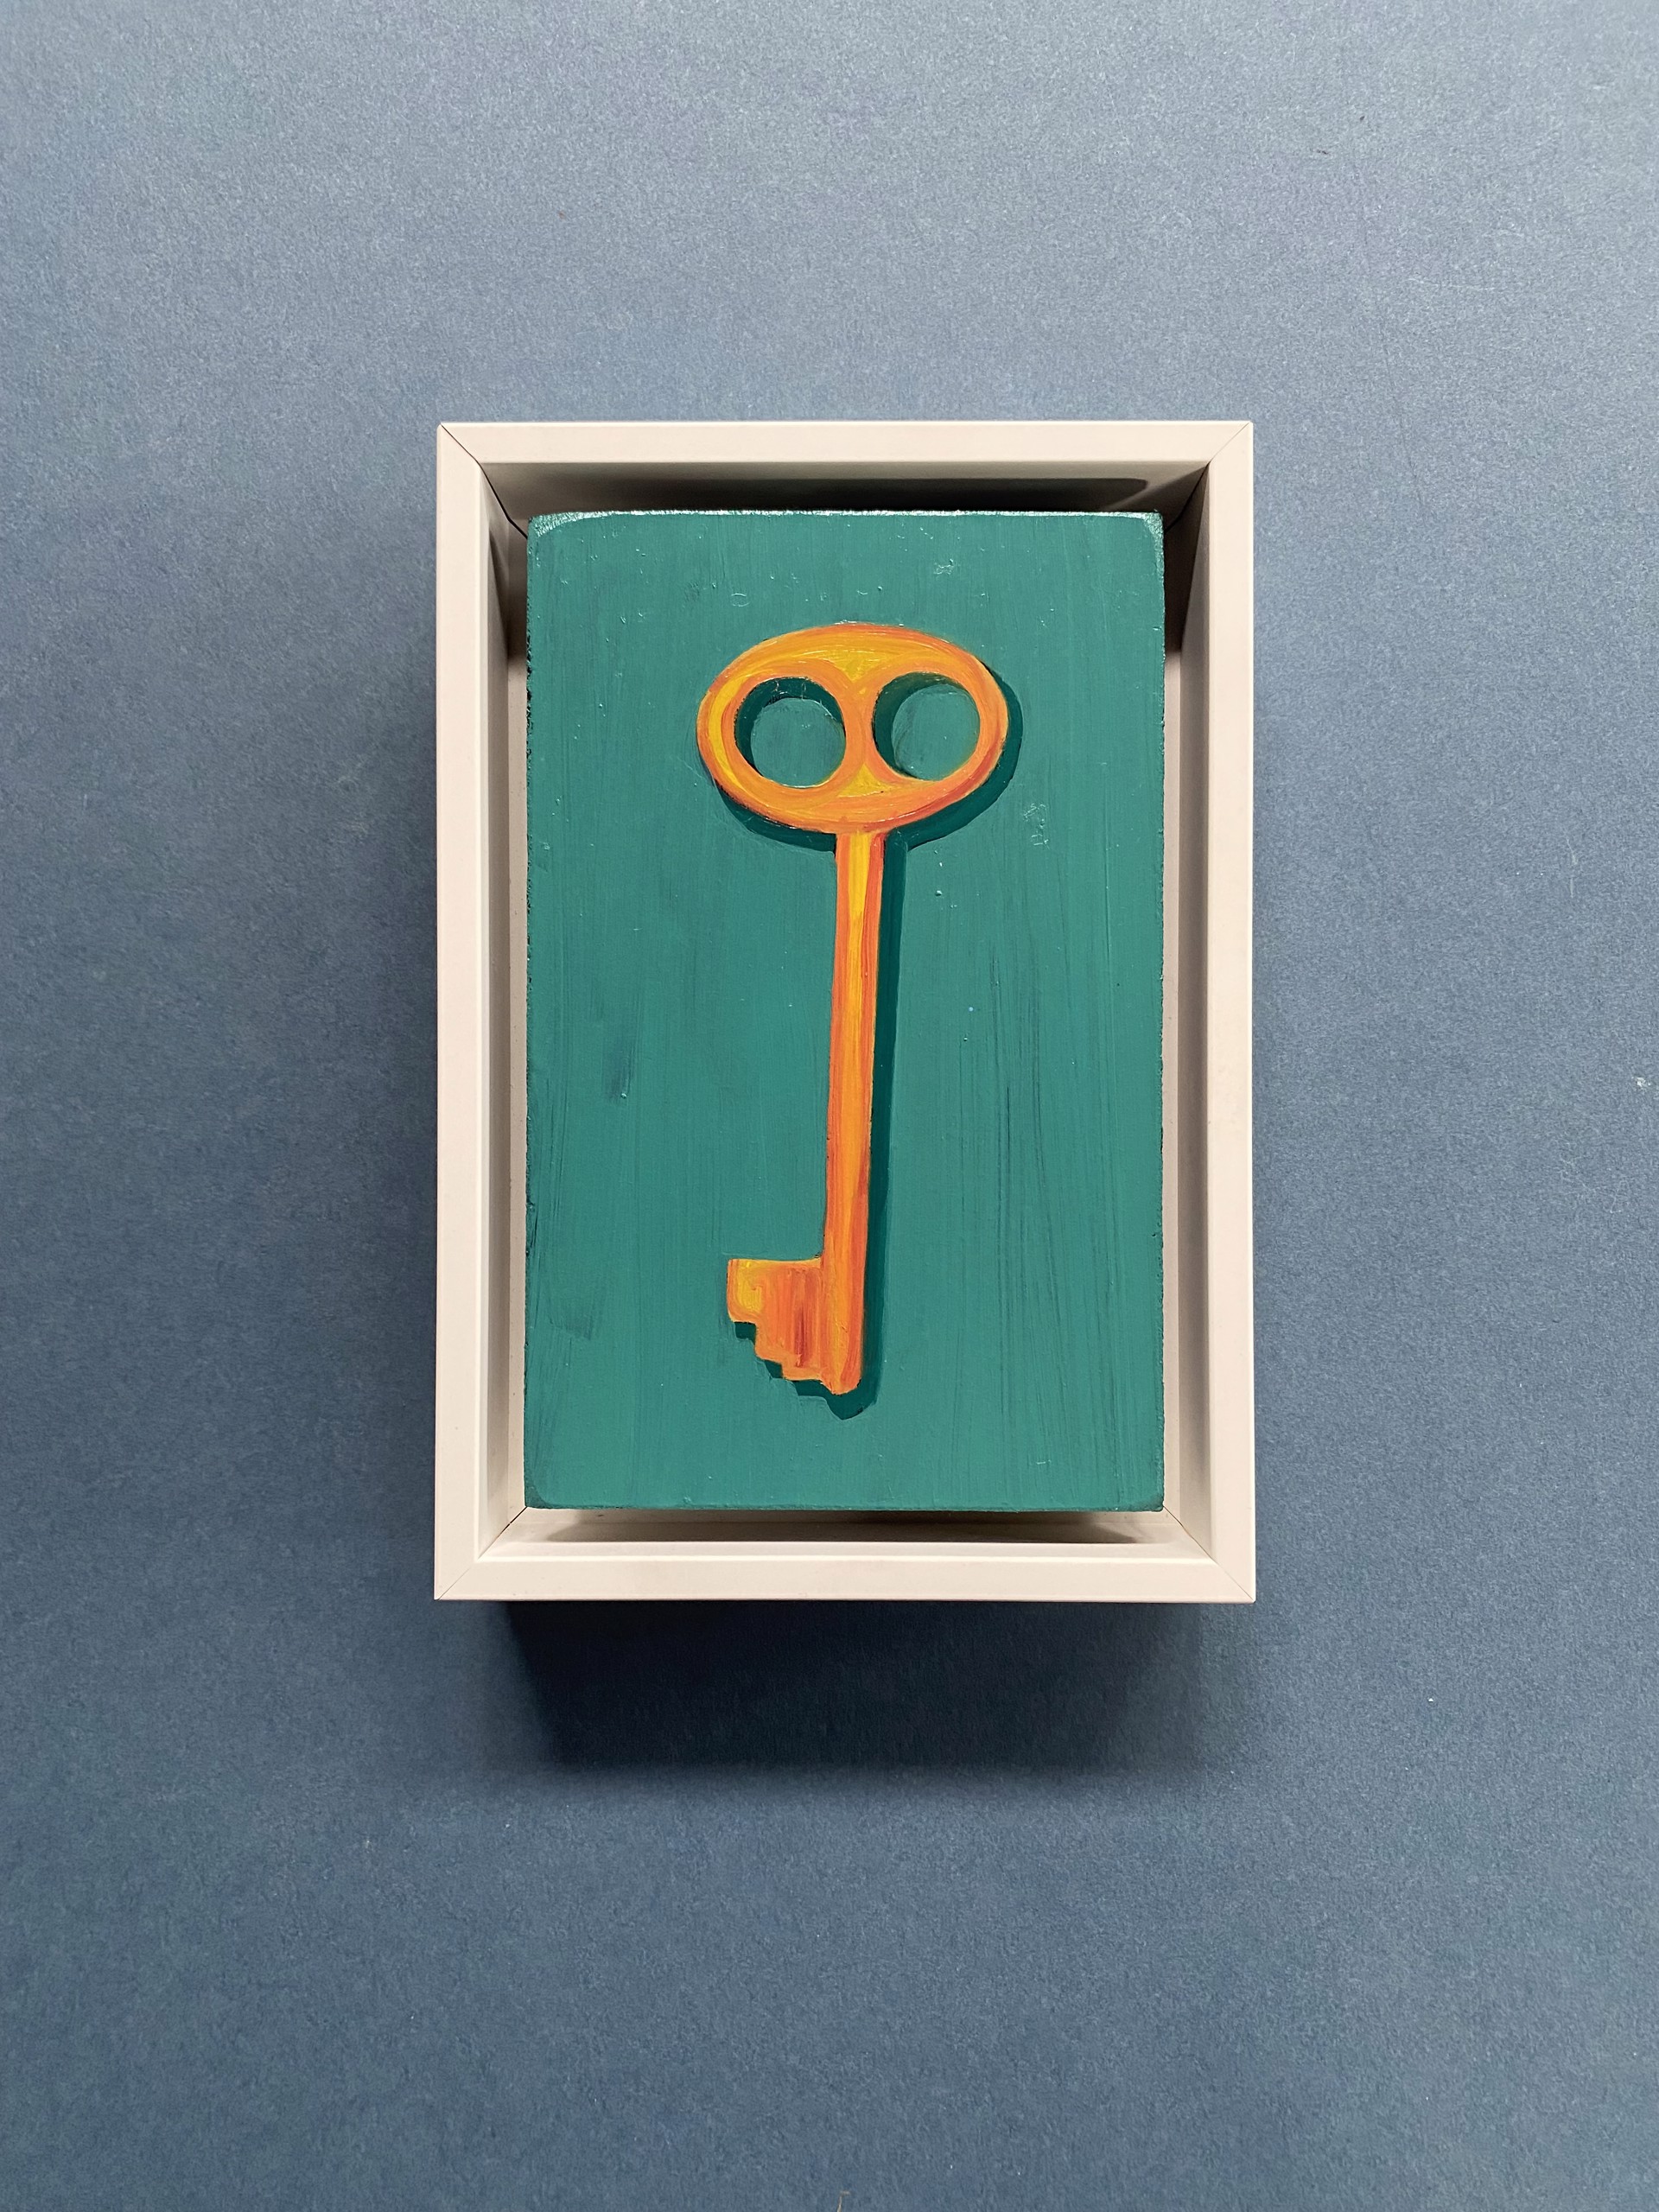 Key No. 8 by Stephen Wells